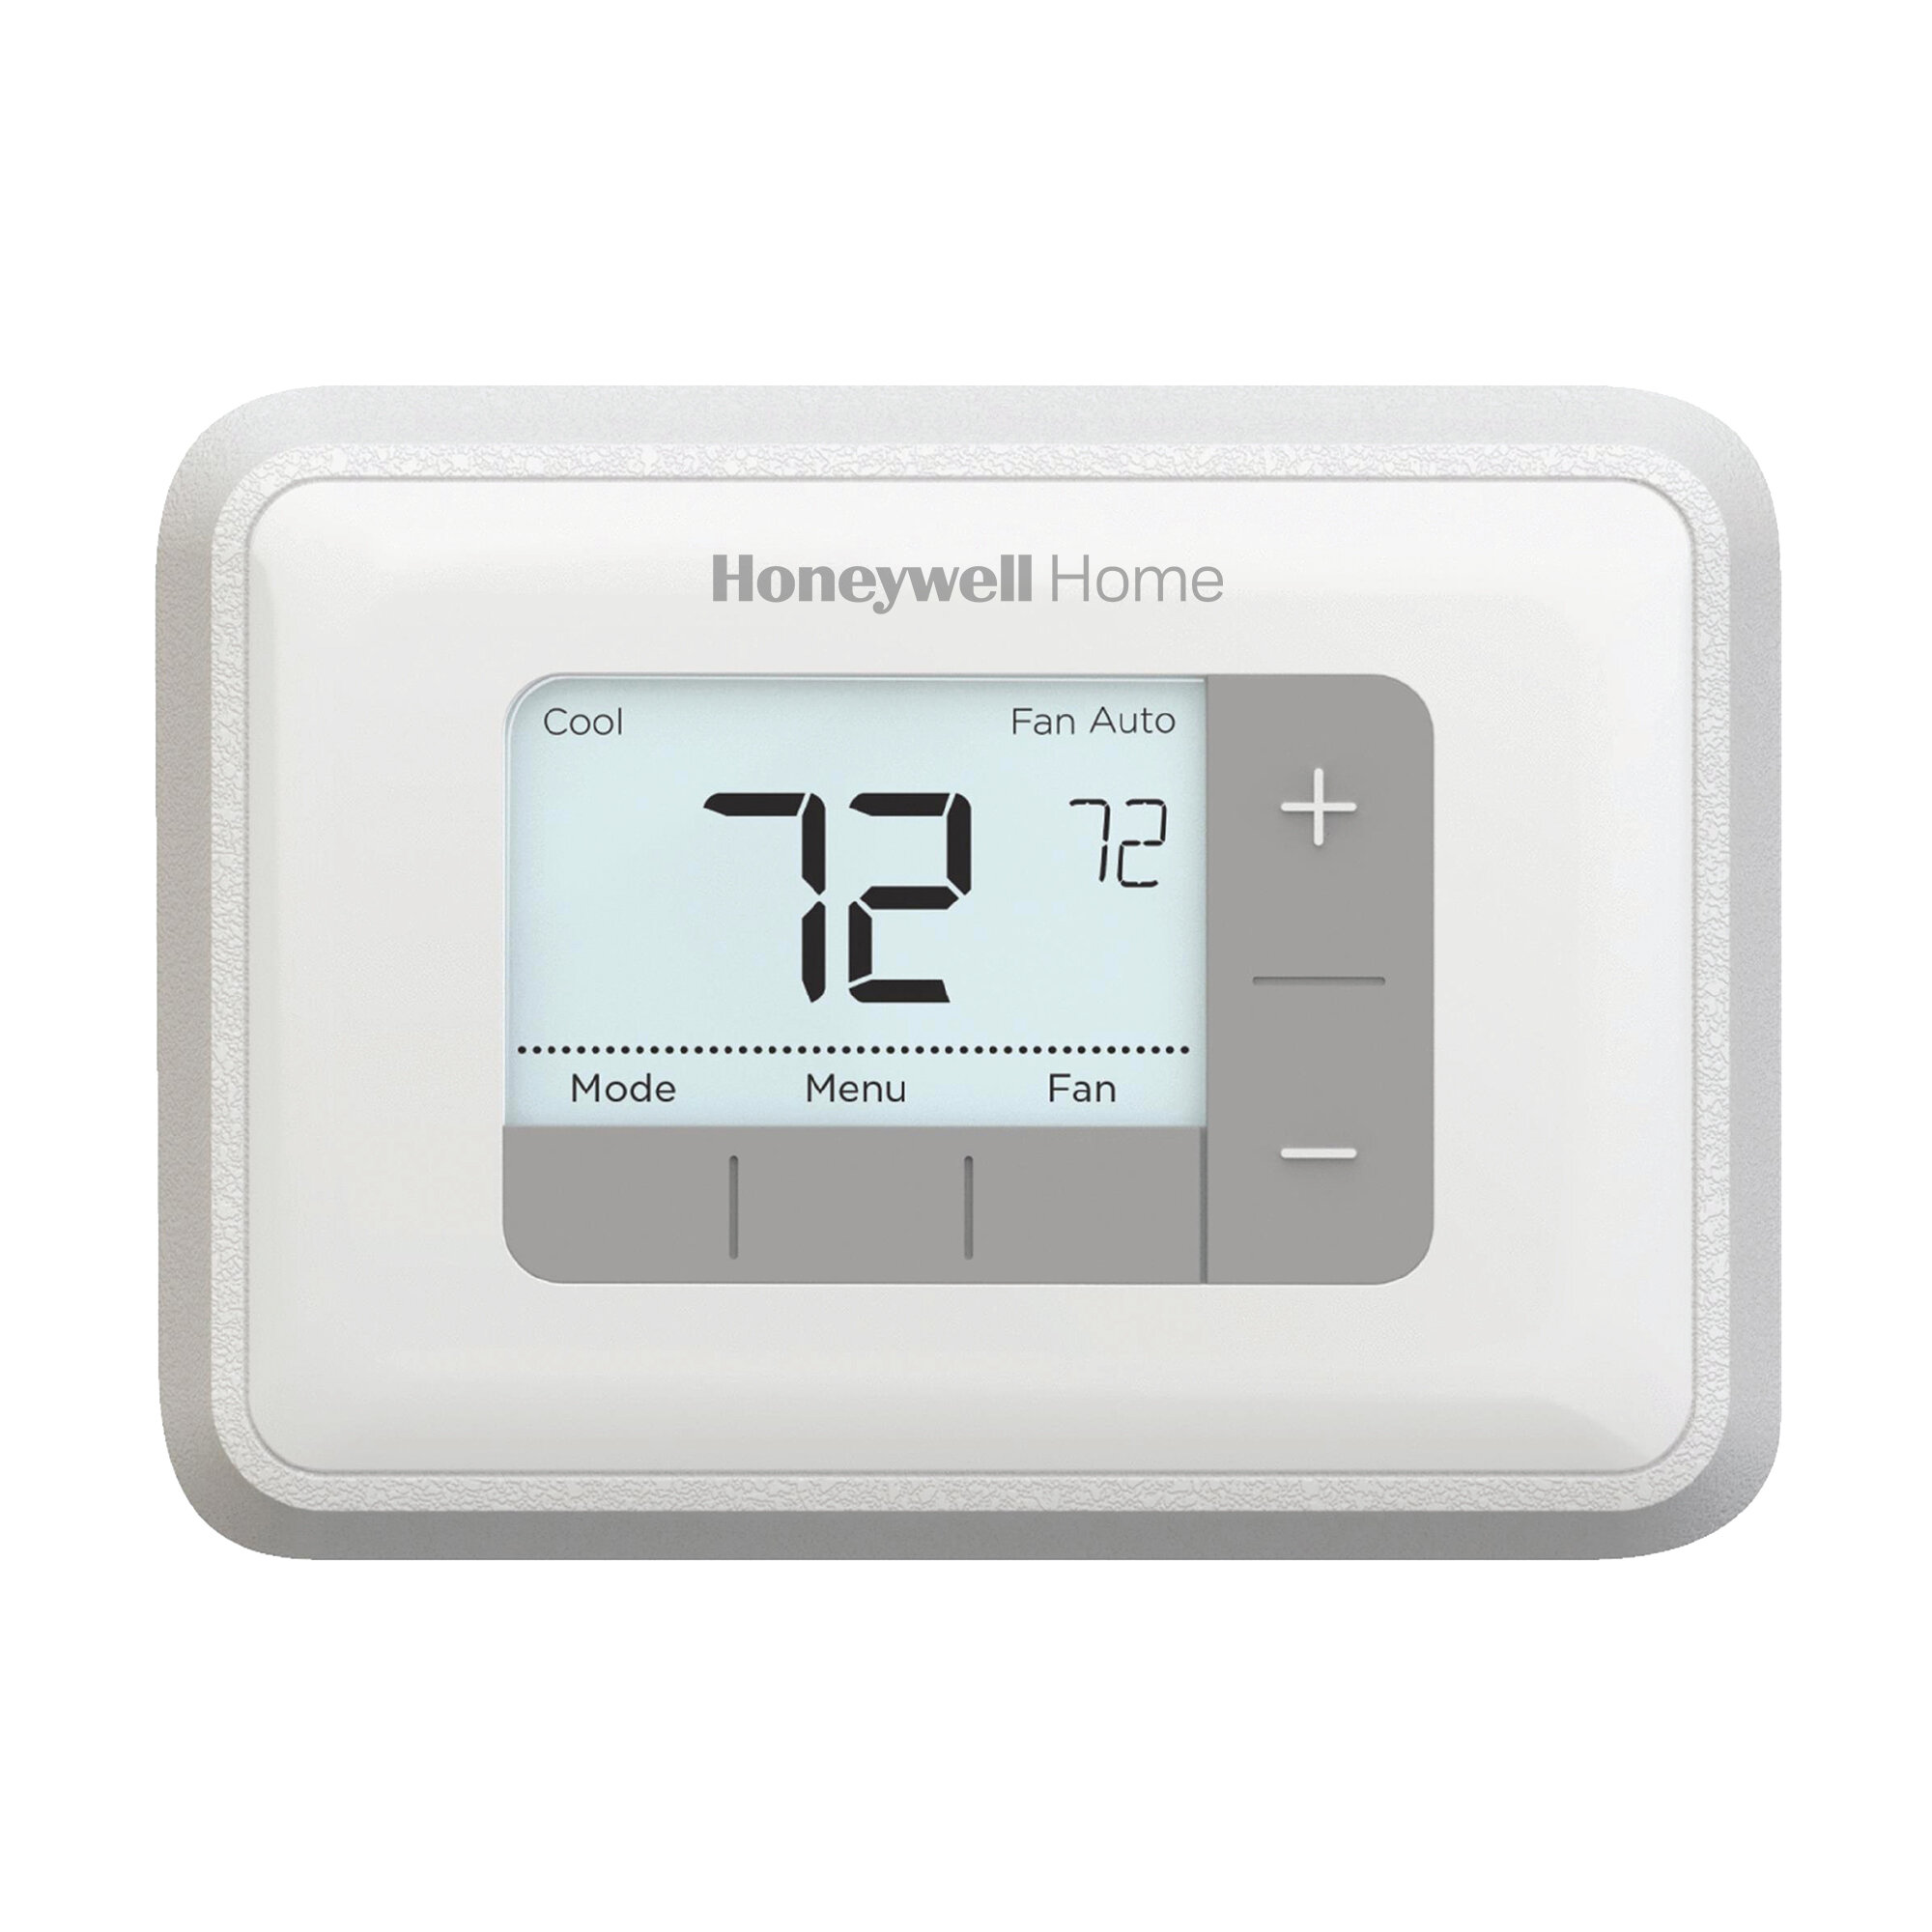 EAGLE PEAK Digital Hygrometer Thermometer Humidity Gauge with Backlight  Display, Indoor Room Thermometer with Temperature Humidity Monitor for  Nursery